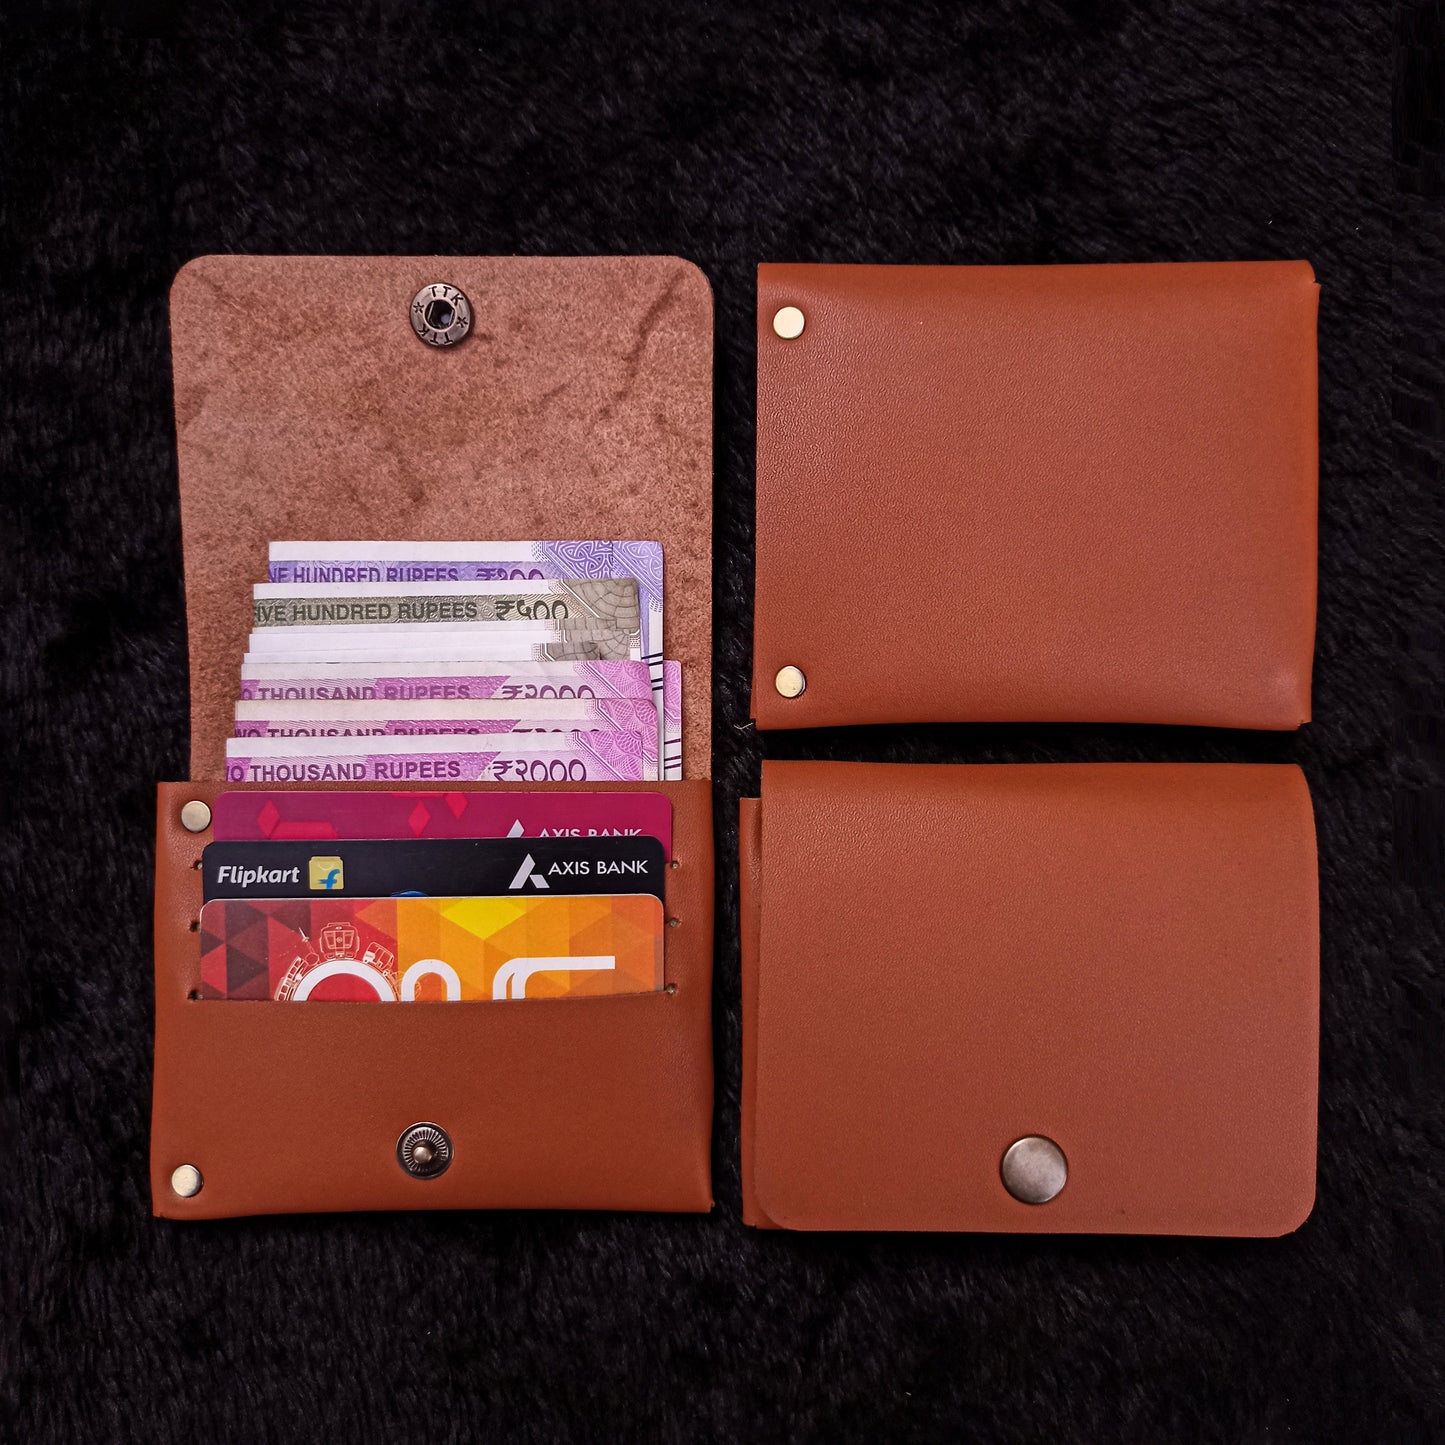 Minimalist Leather Wallet - Faztroo